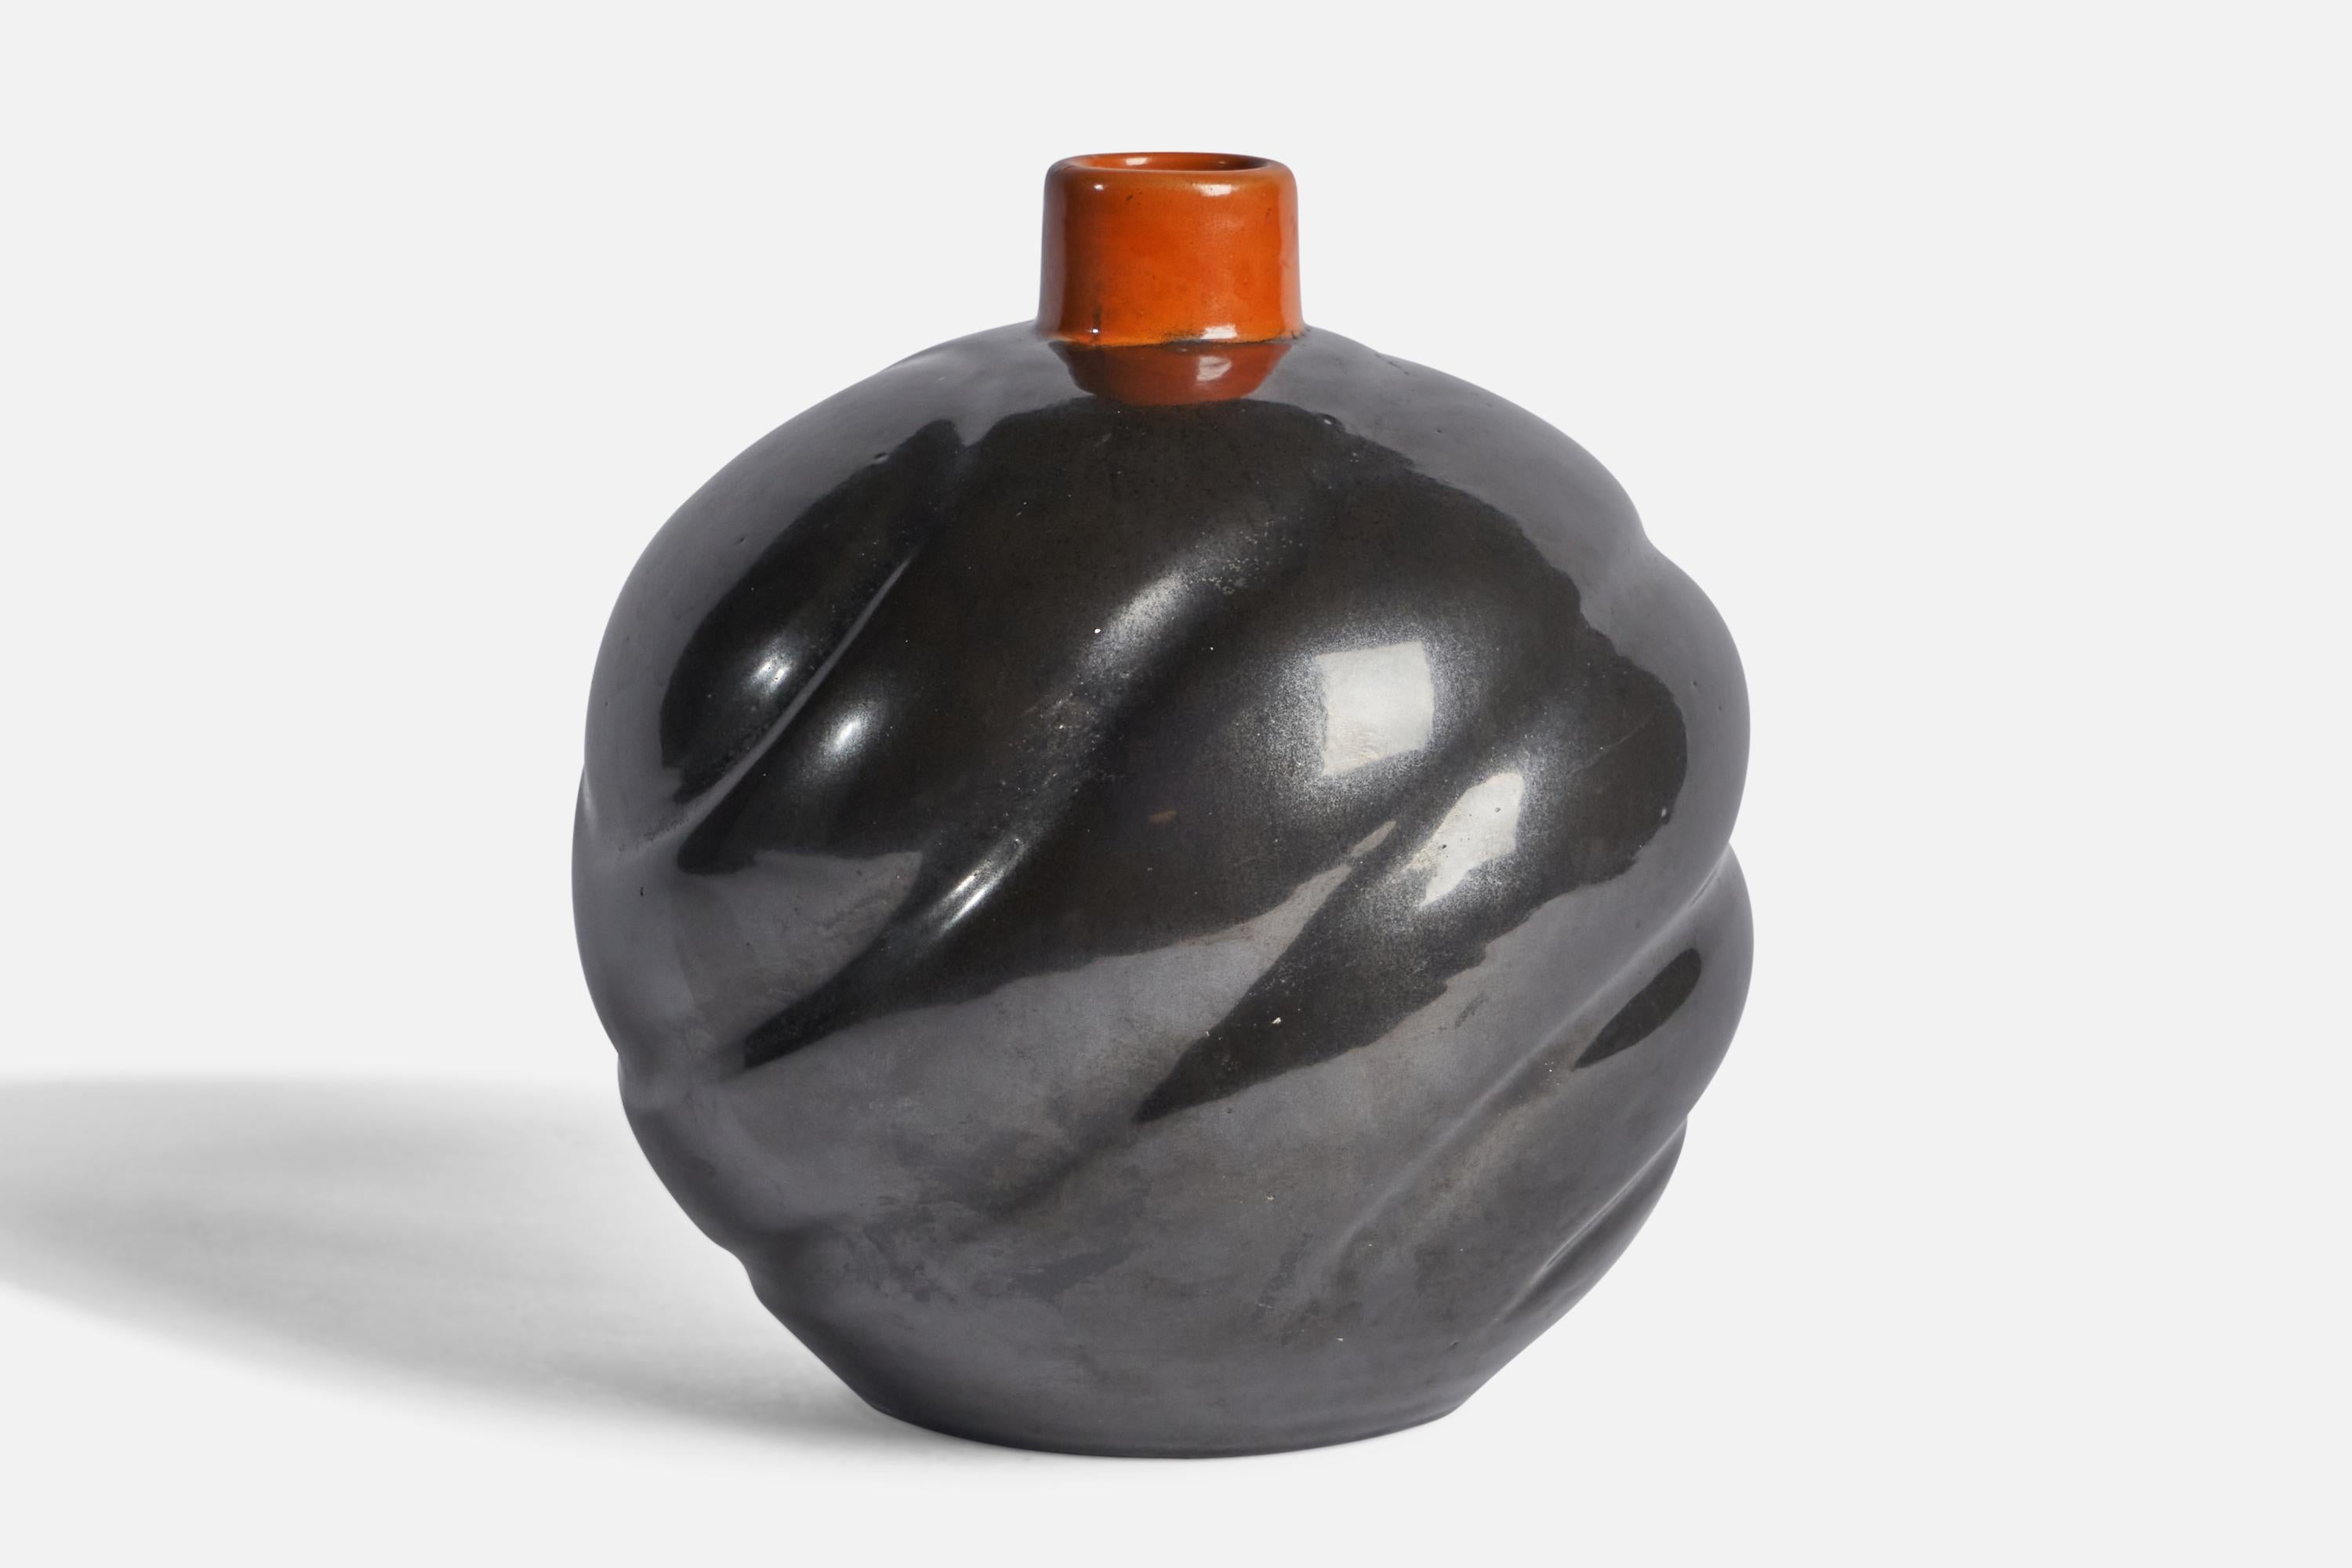 An orange and black-glazed earthenware vase designed and produced by Upsala Ekeby, Sweden, 1930s.